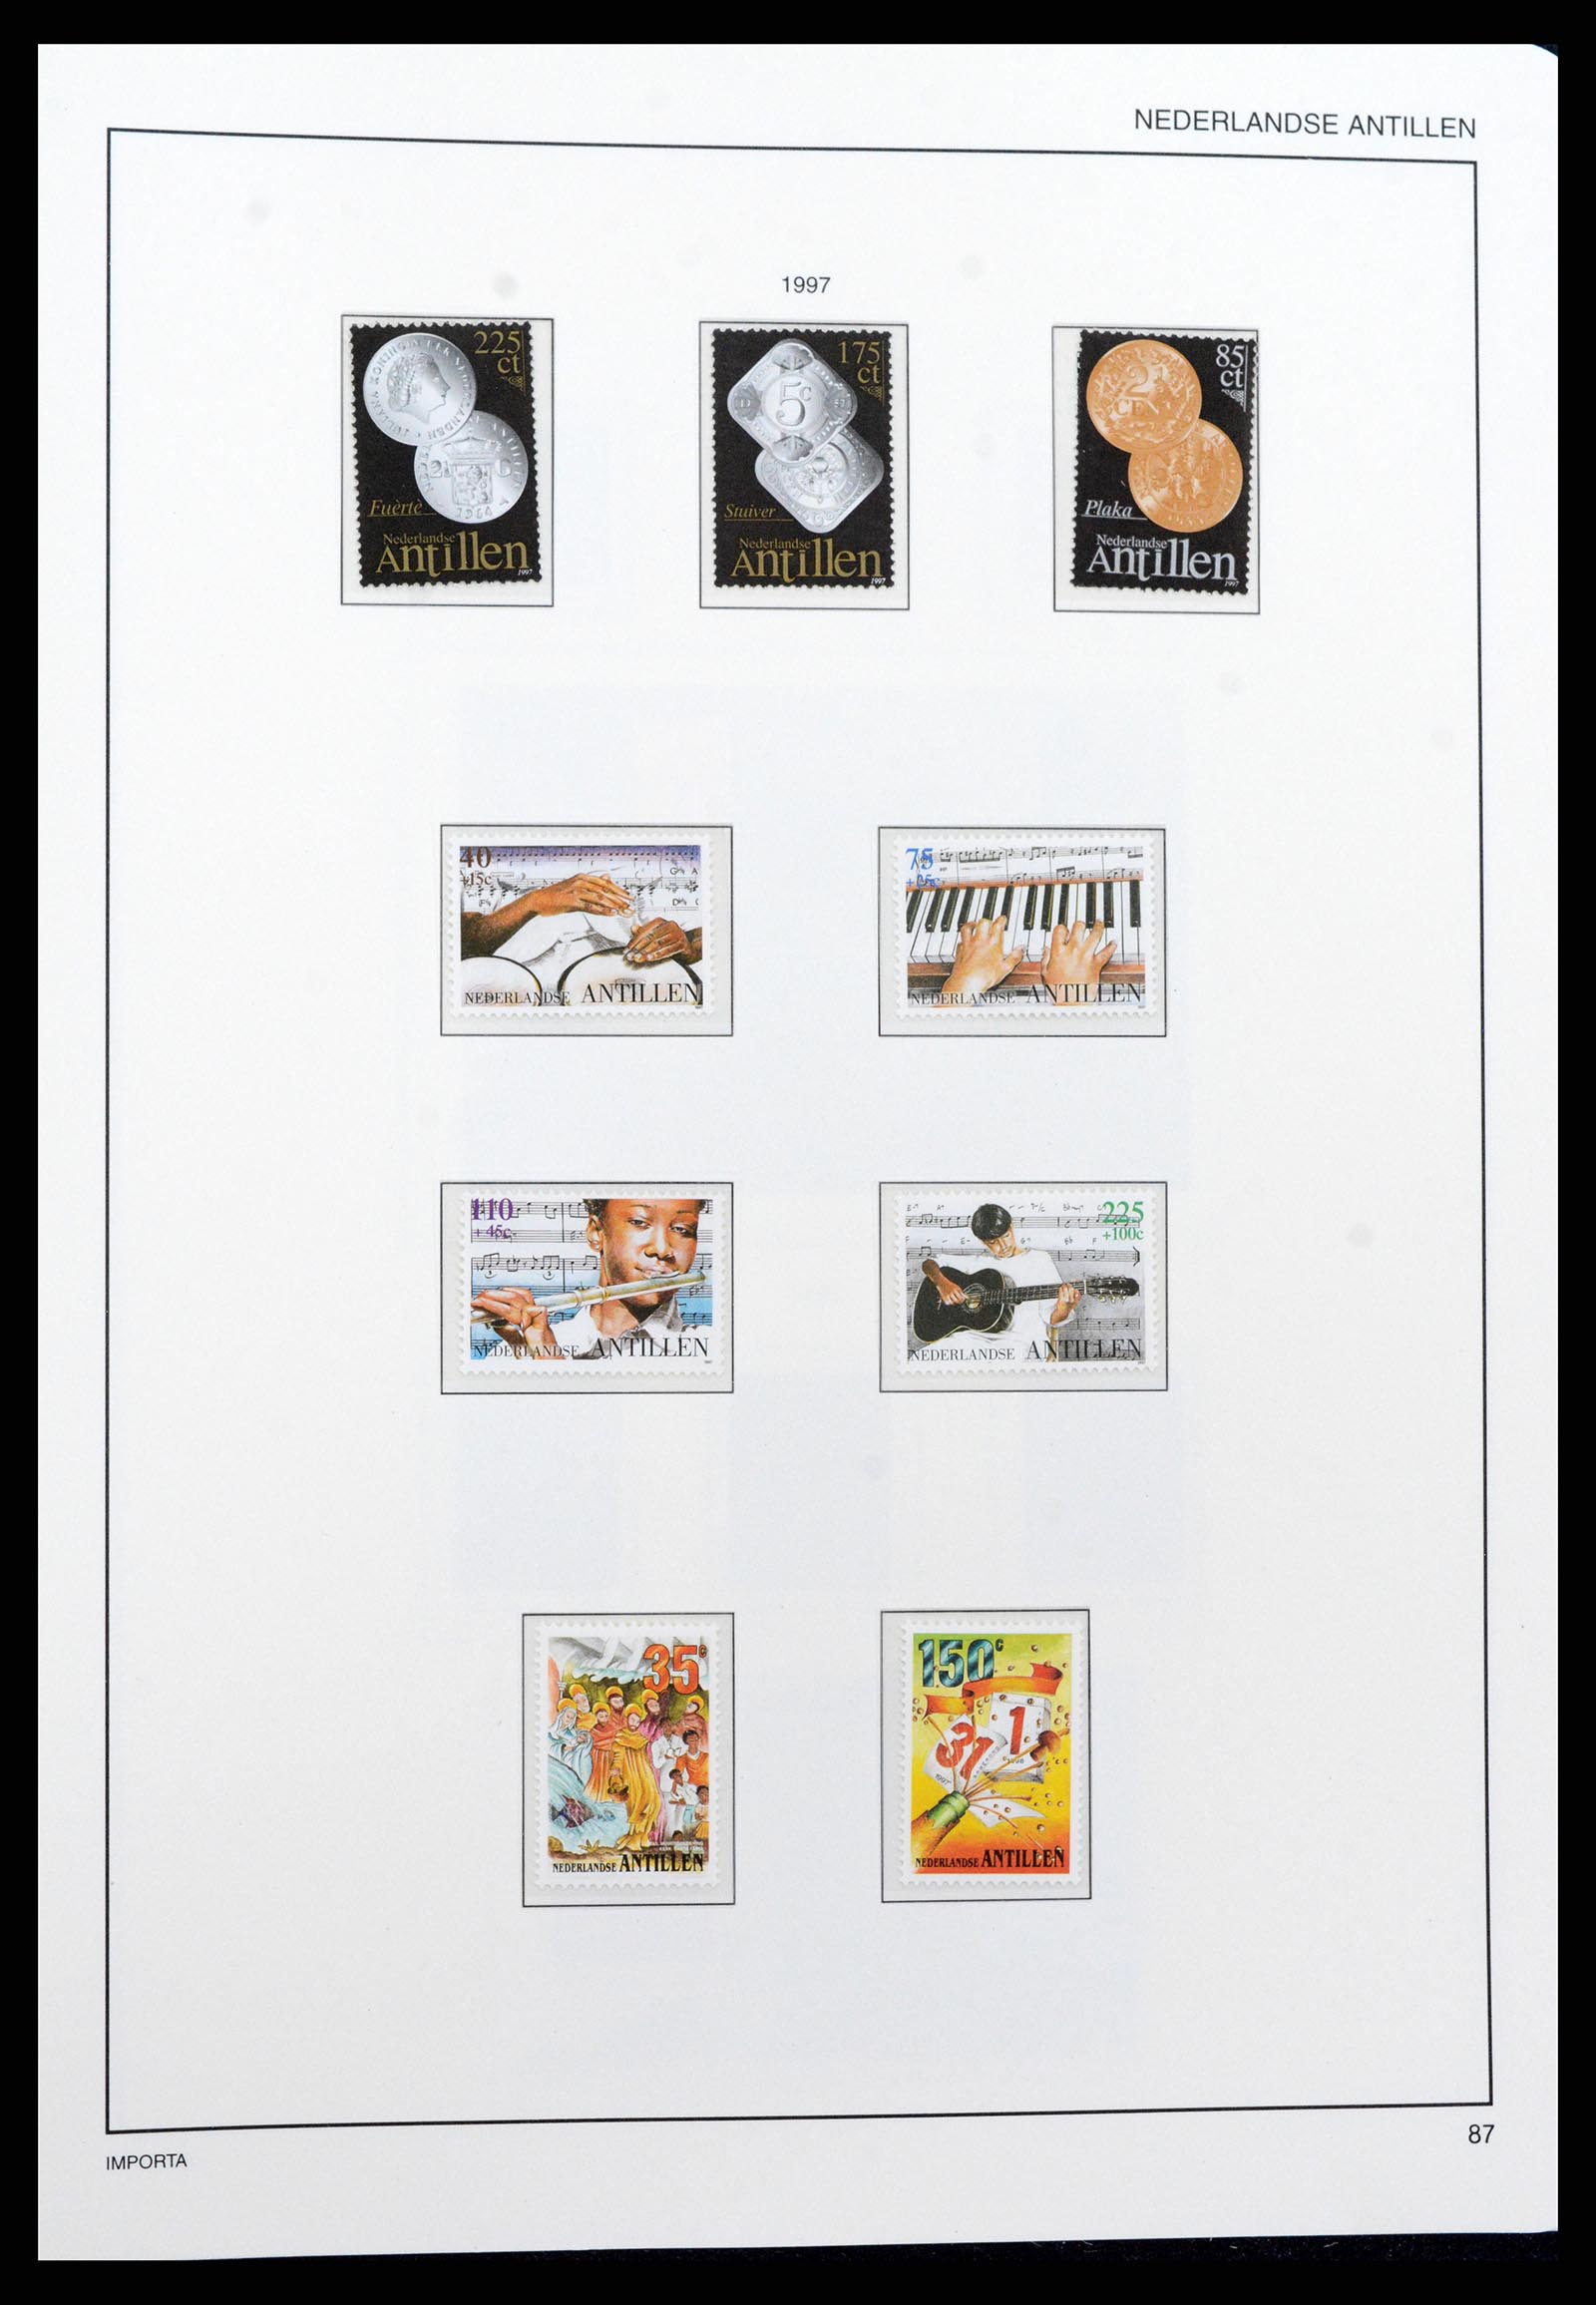 37693 088 - Stamp collection 37693 Netherlands Antilles 1949-2001.